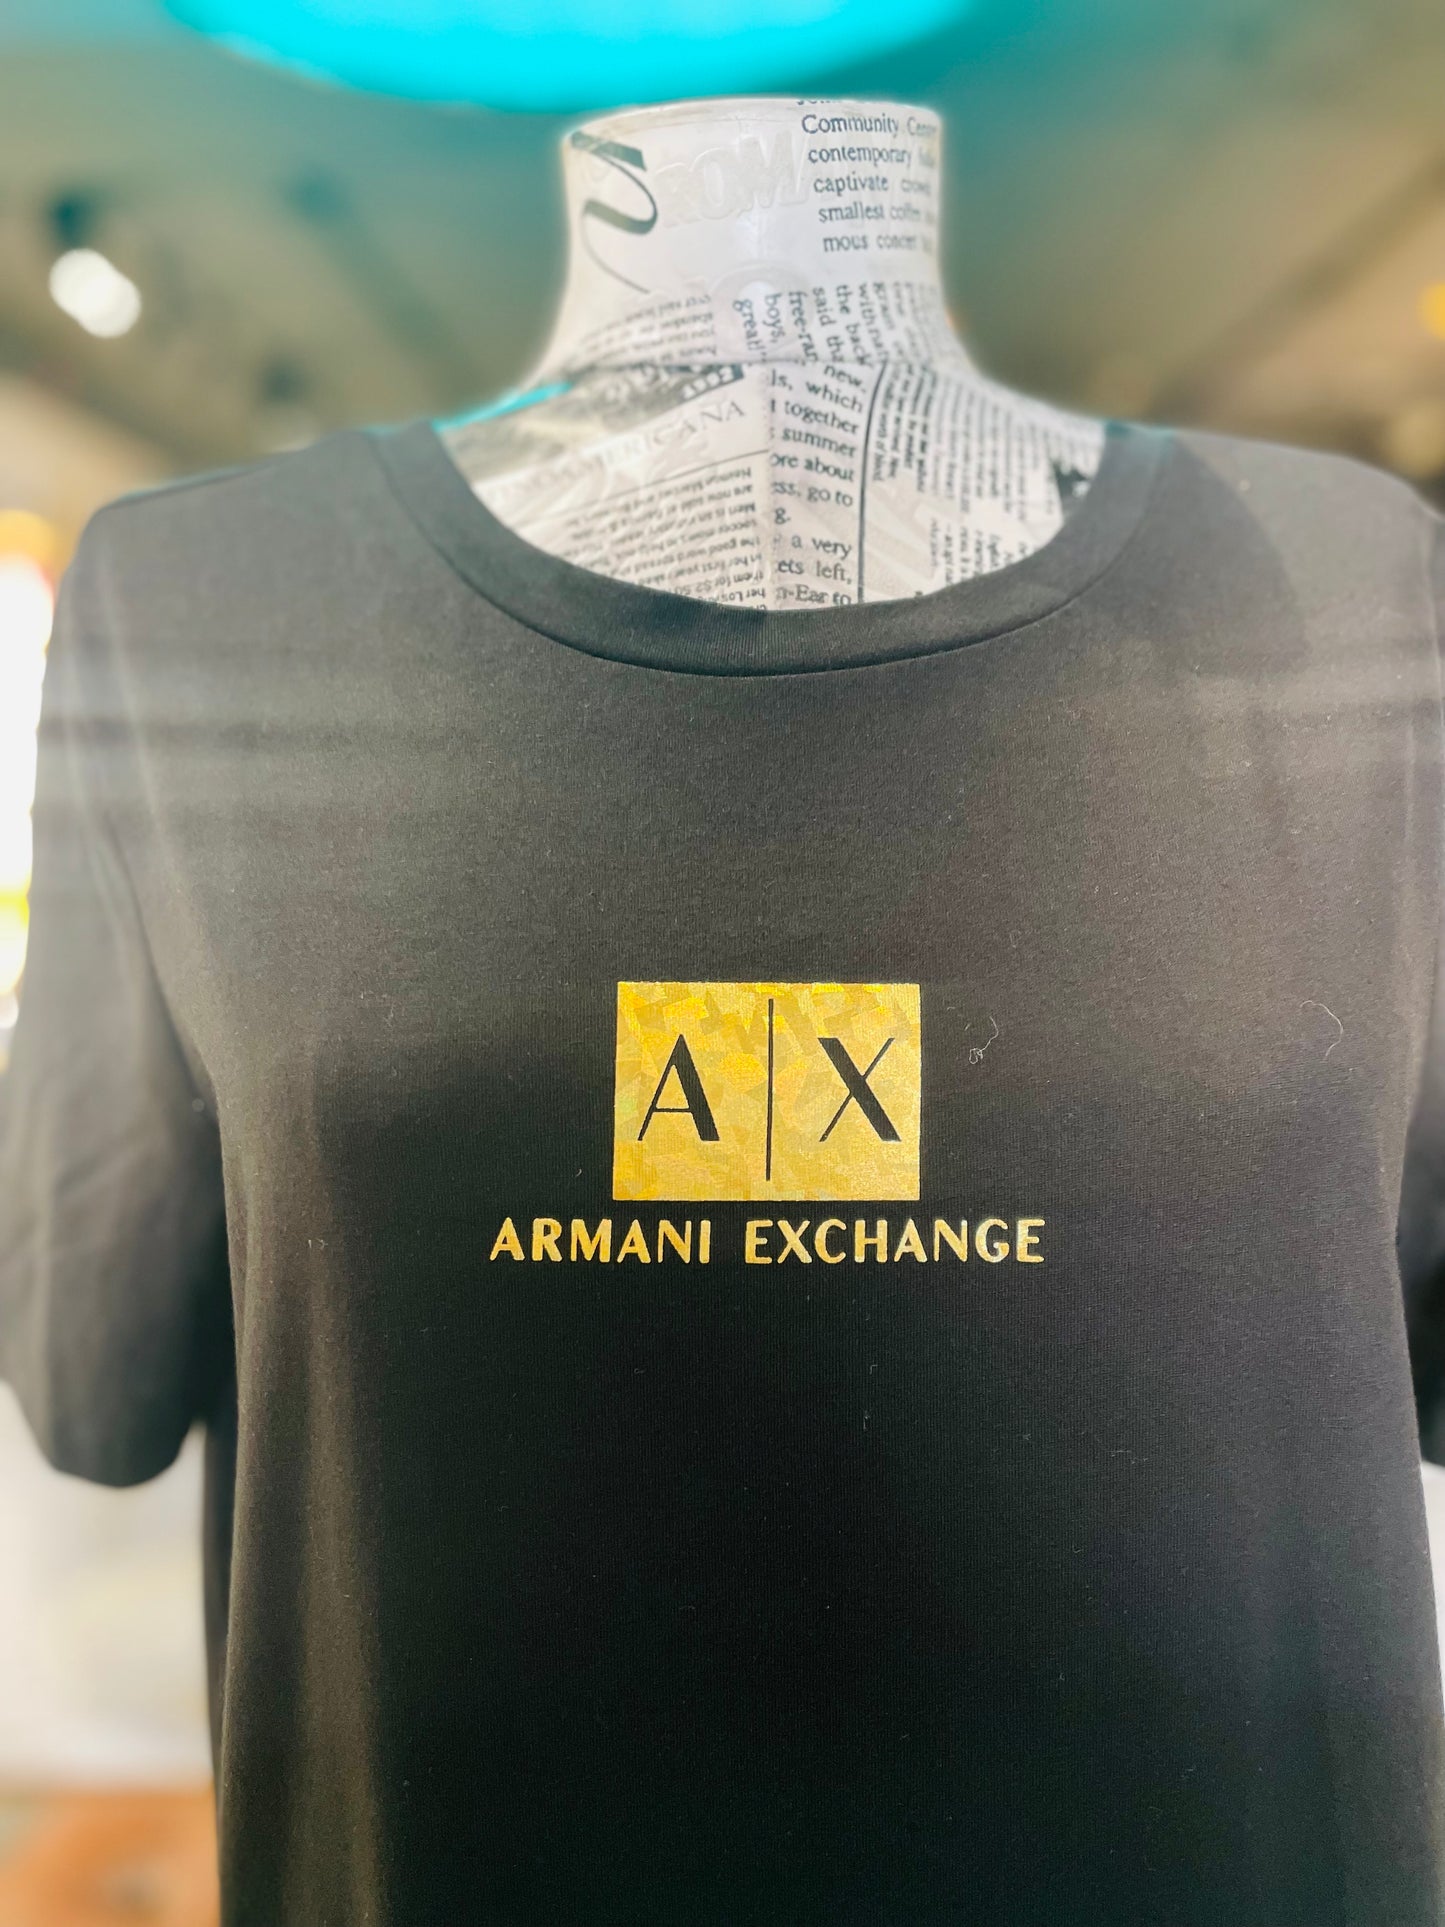 Armani exchange dress shirt